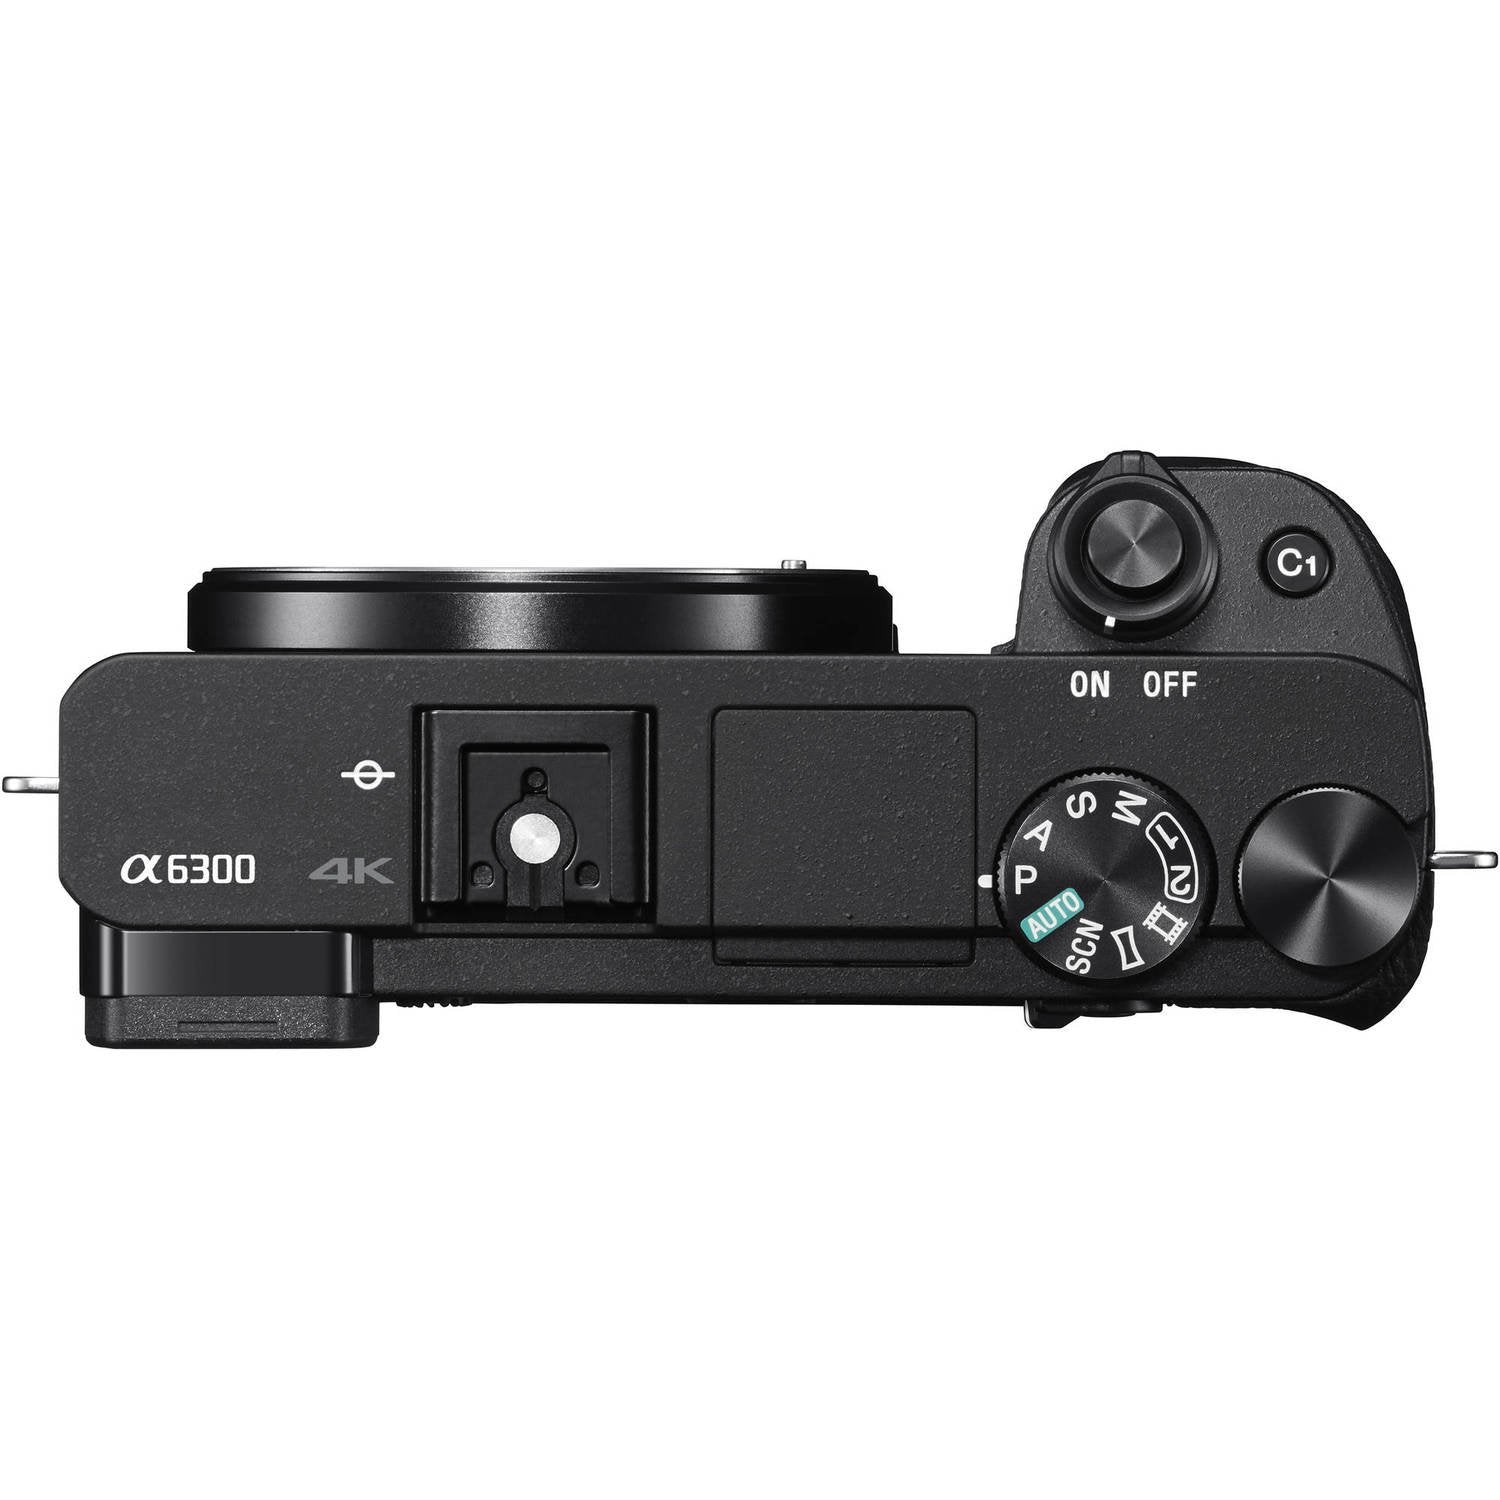 Sony Alpha a6300 Mirrorless Digital Camera (International Model) E 10-18mm f/4 OSS Lens + 62mm 3 Piece Filter Kit + NP-F